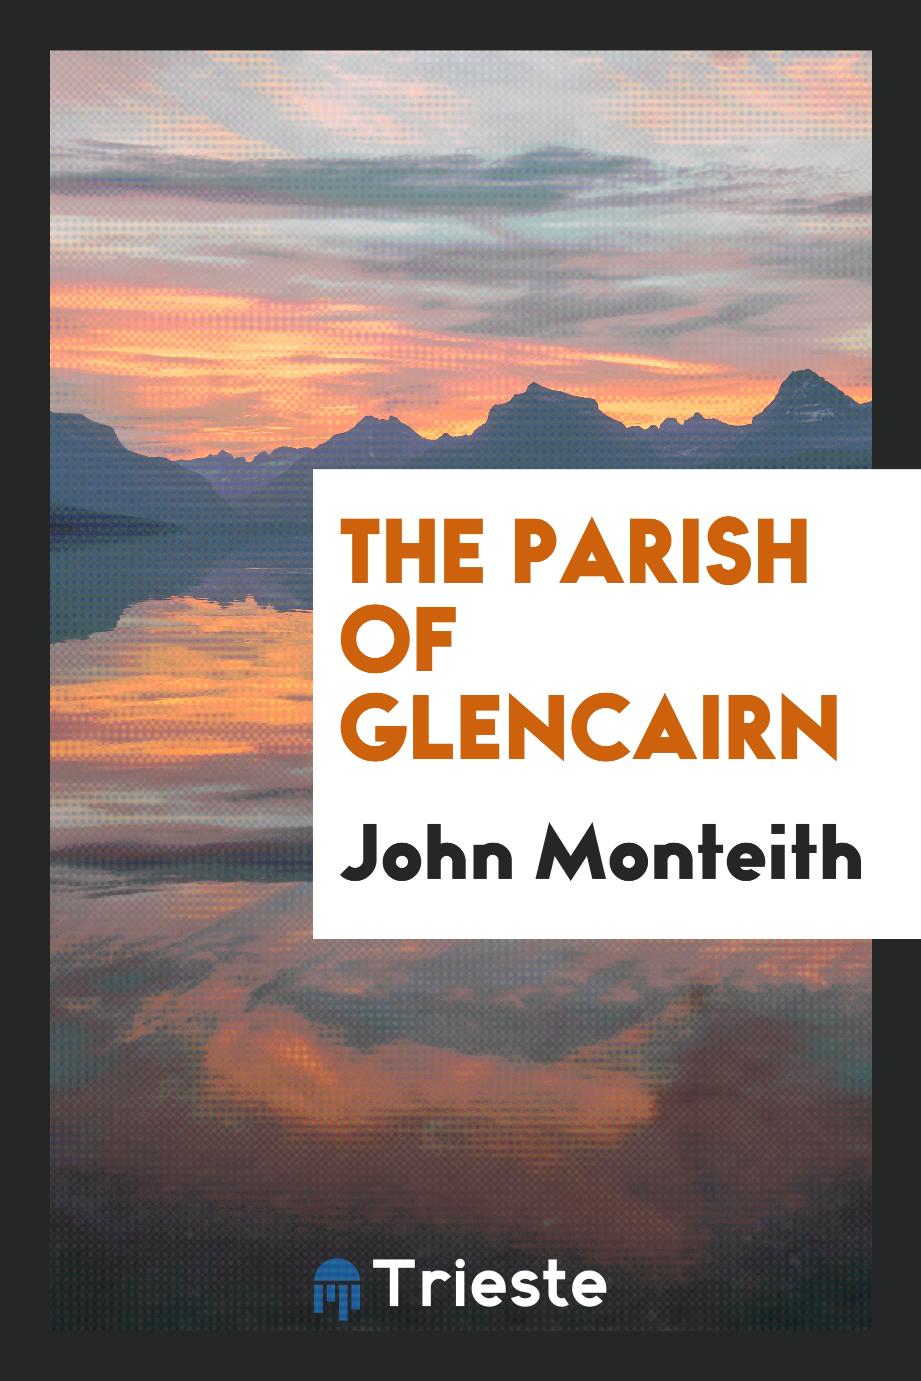 The Parish of Glencairn